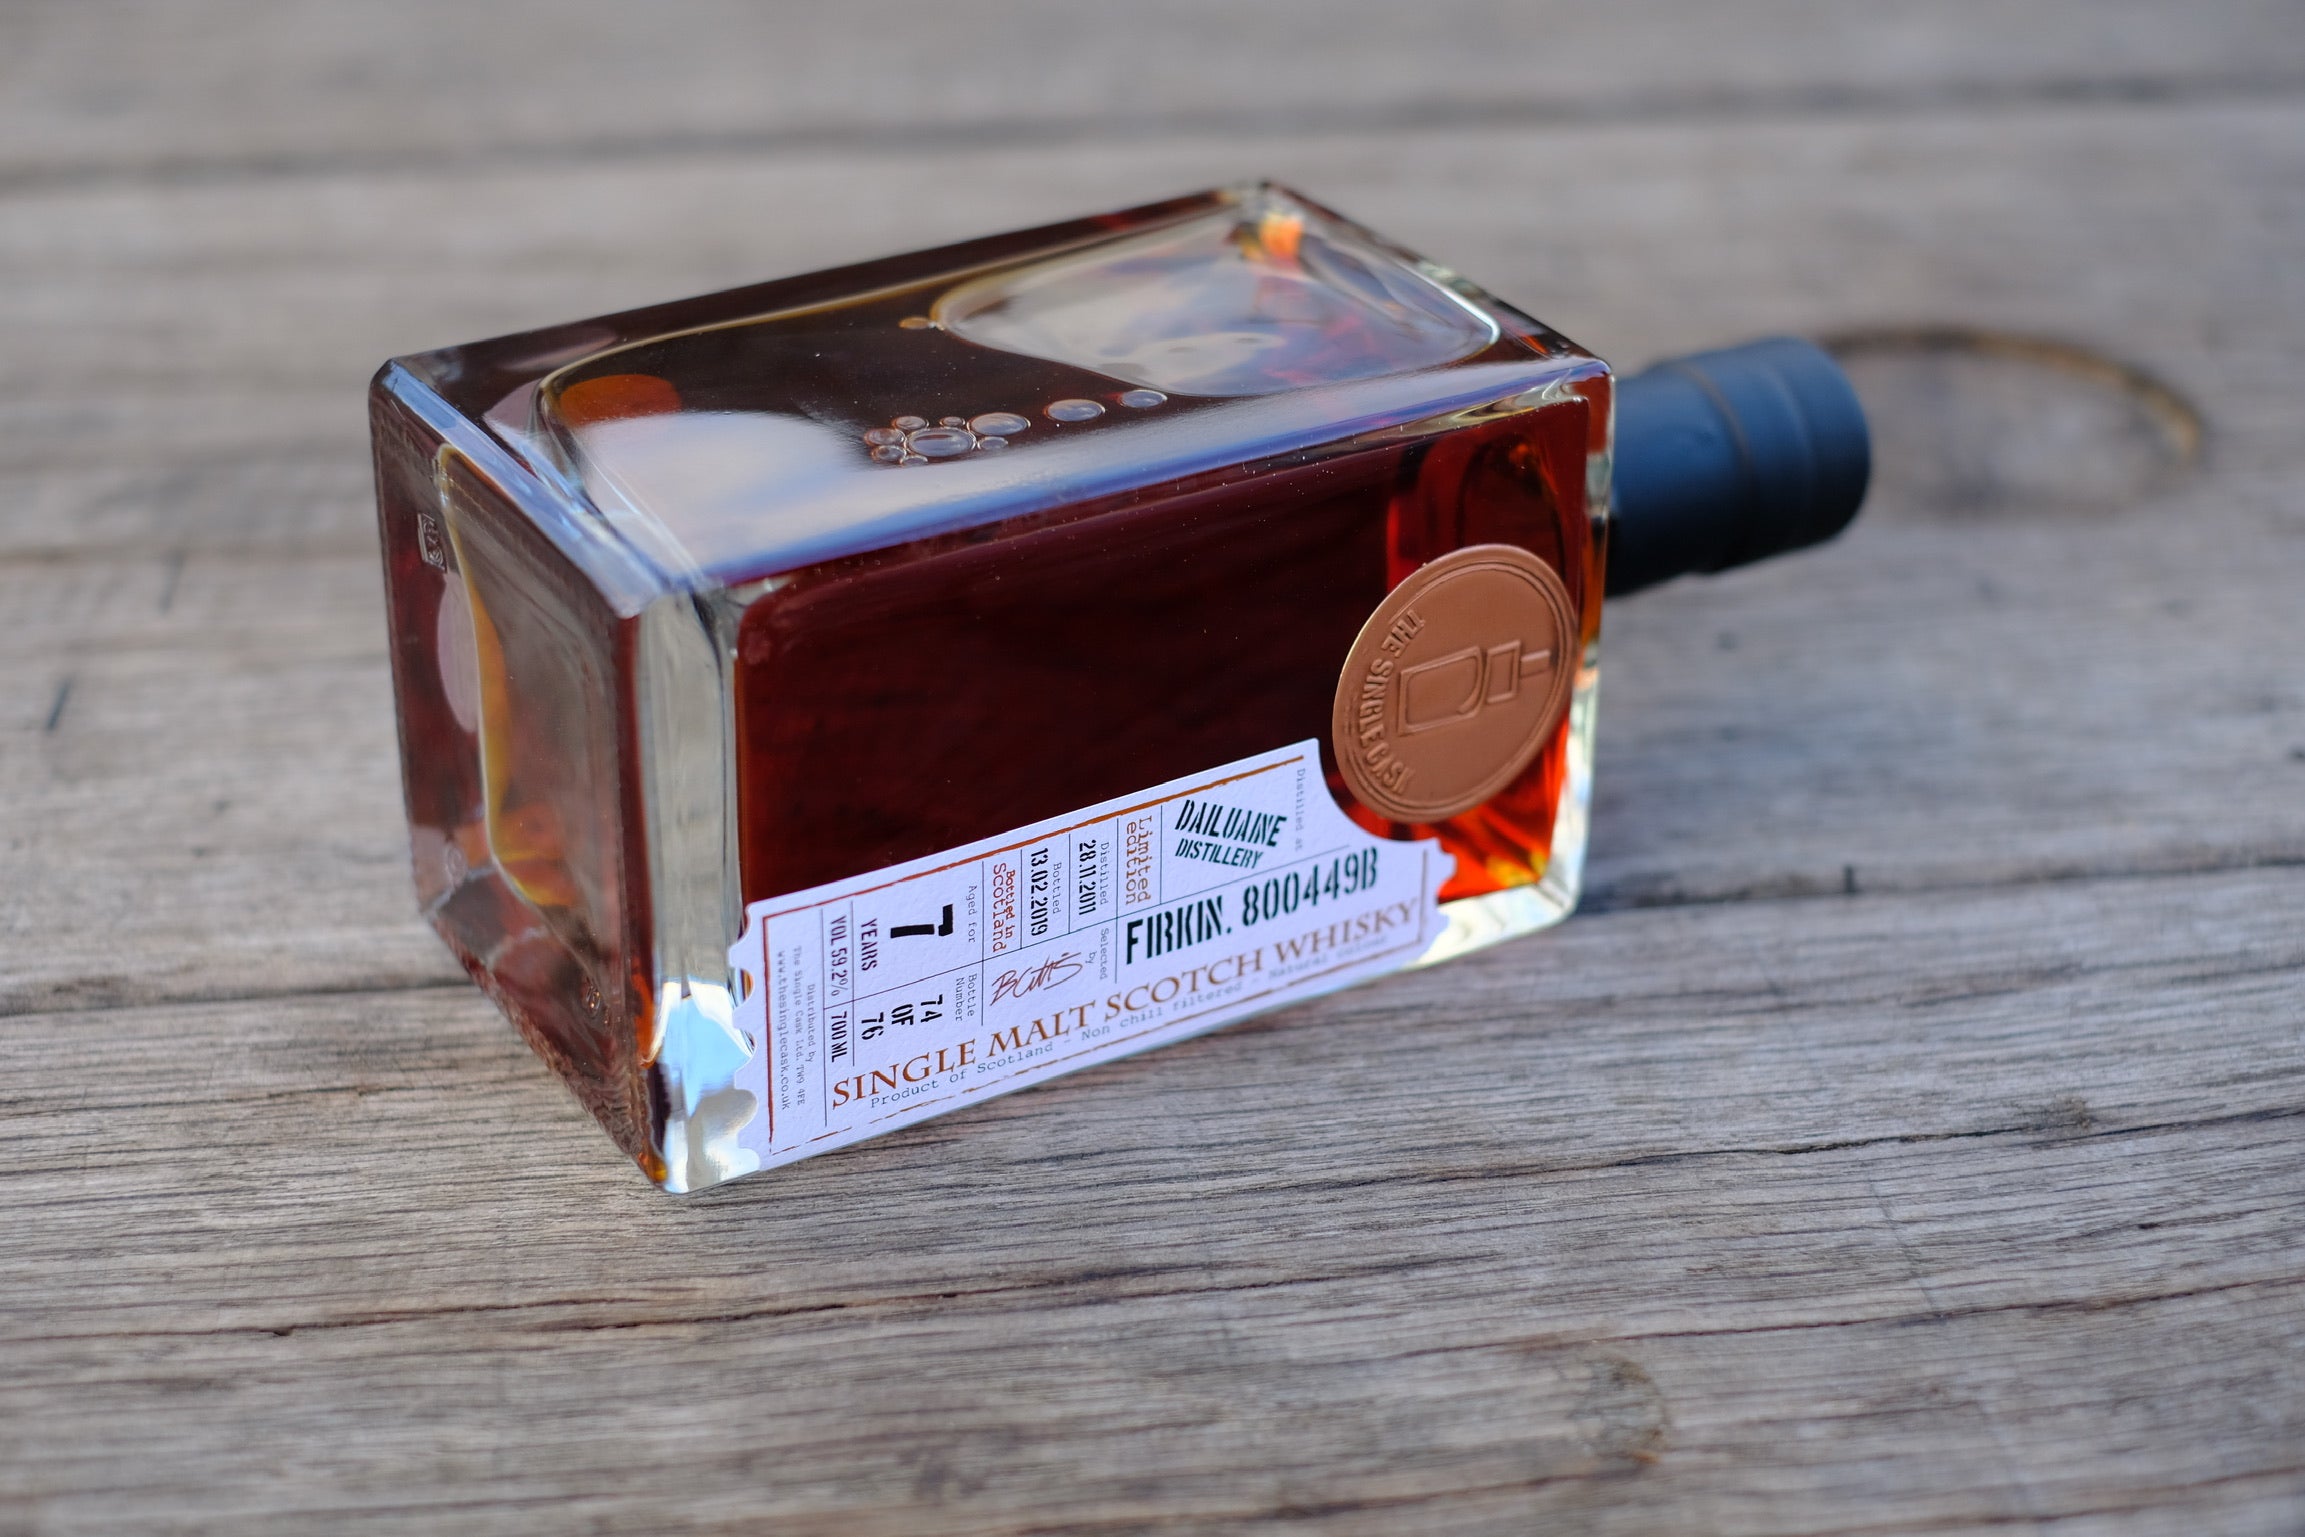 Speyside single malt whisky